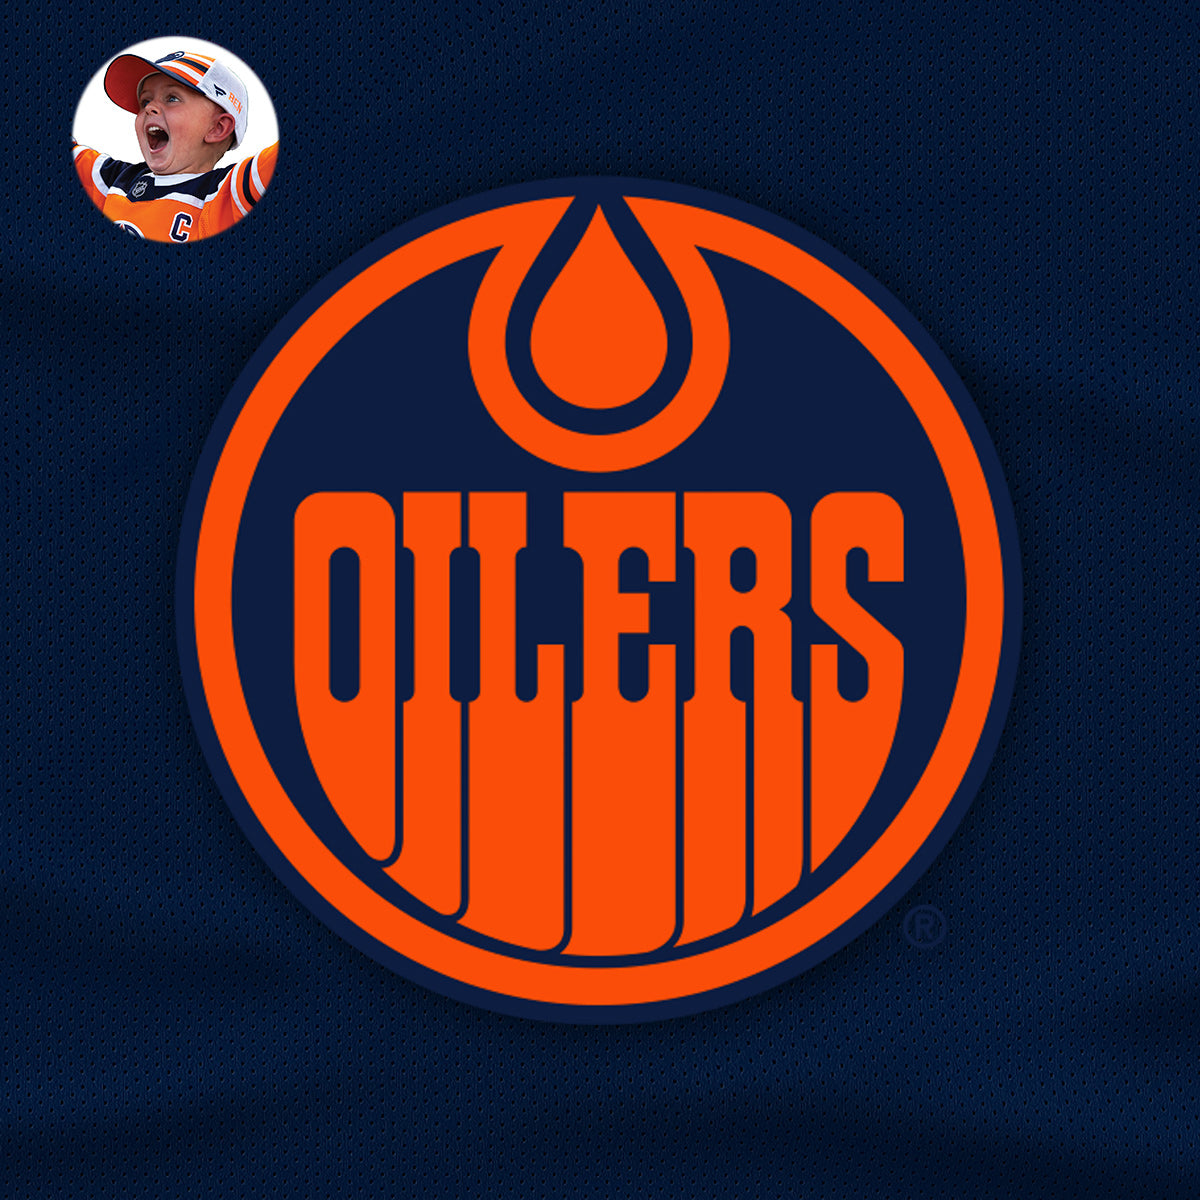 Edmonton Oilers third jersey